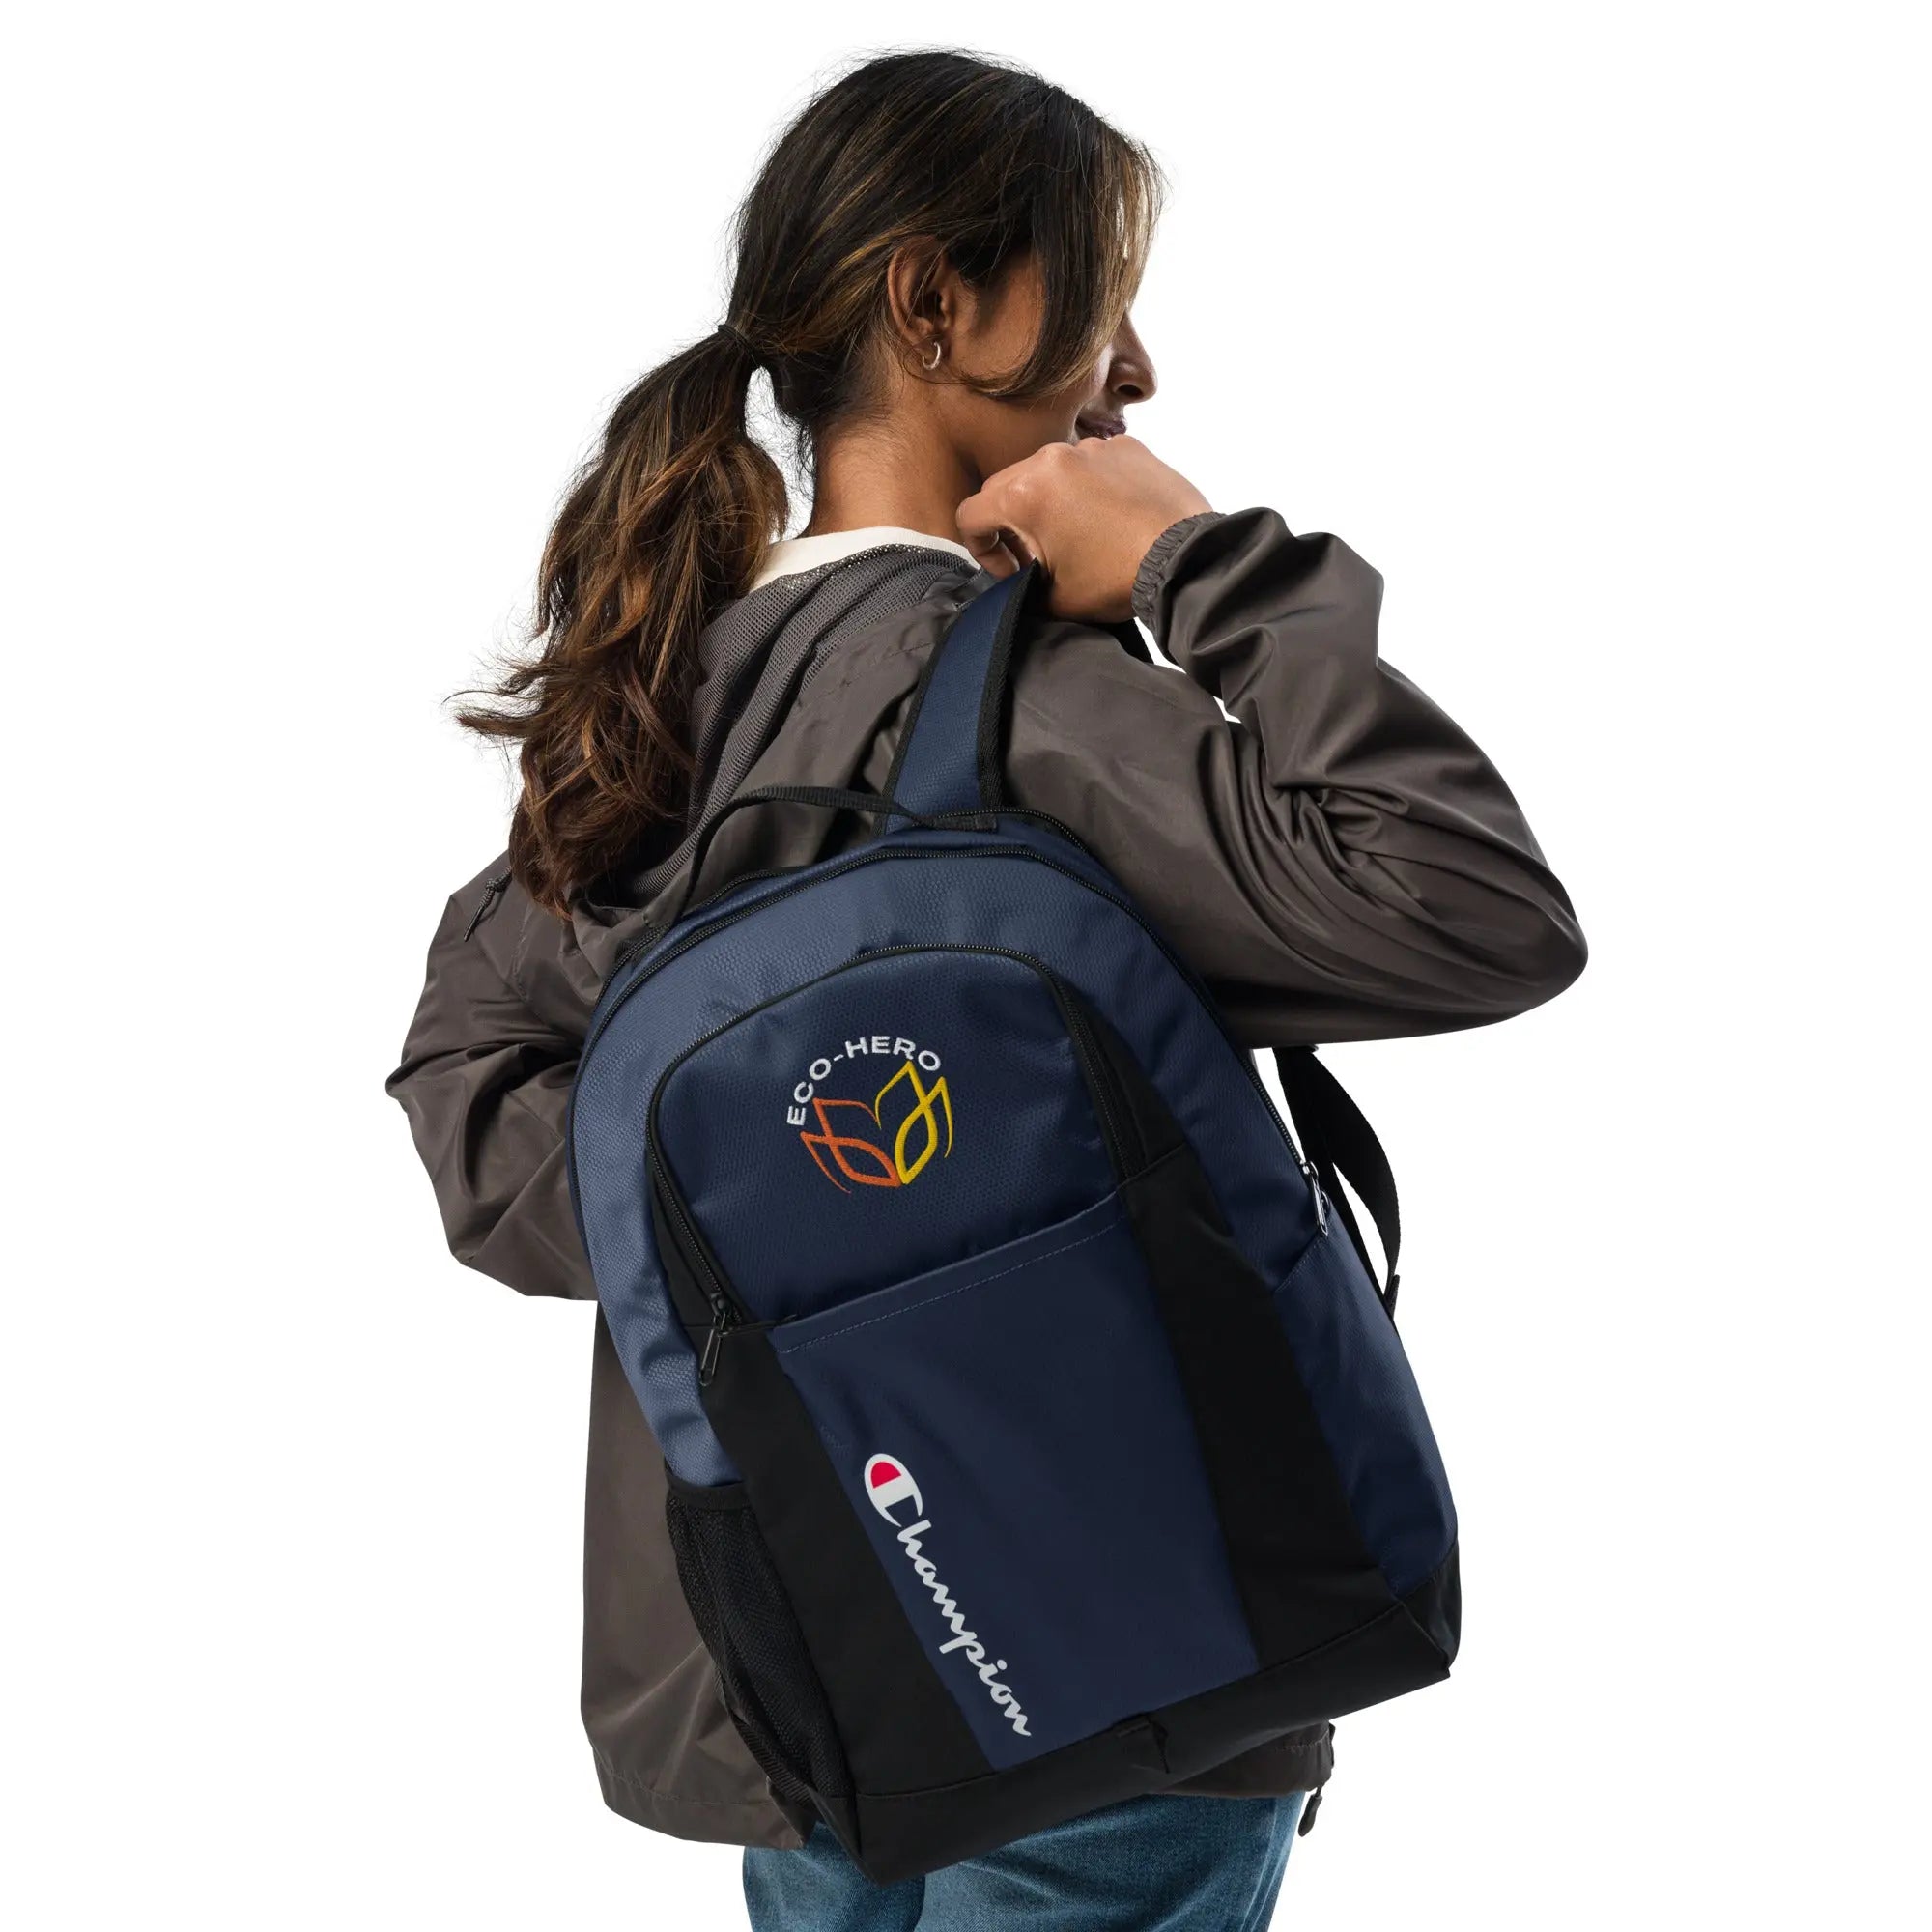 Champion backpack | Eco Hero GeorgeKenny Design